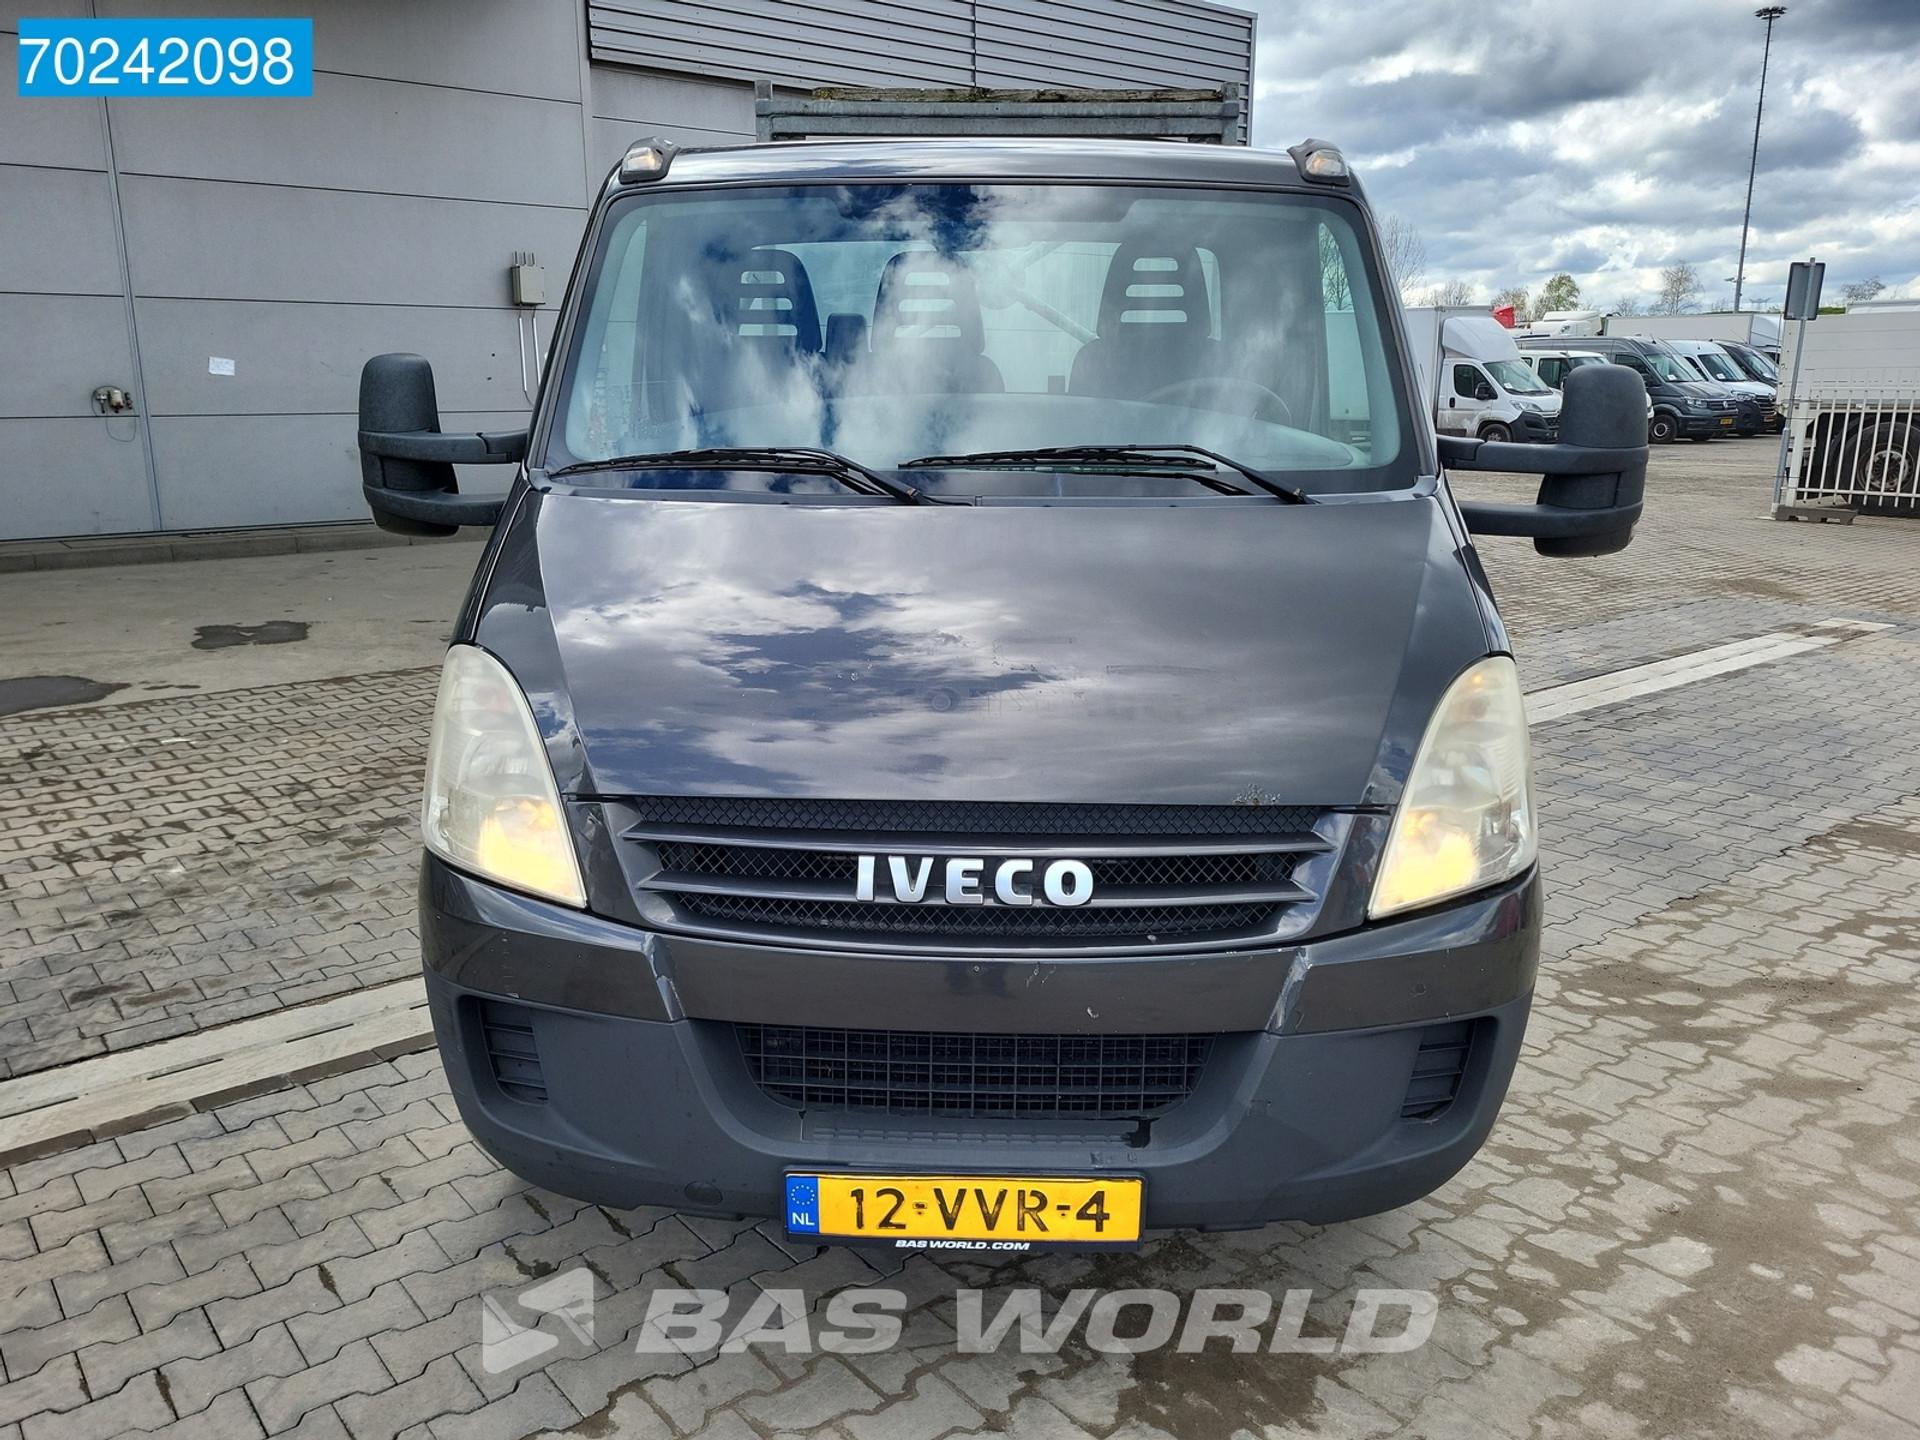 Foto 6 van Iveco Daily 40C18 BE combinatie Iveco Daily Veldhuizen Oplegger BE Trekker Cruise control